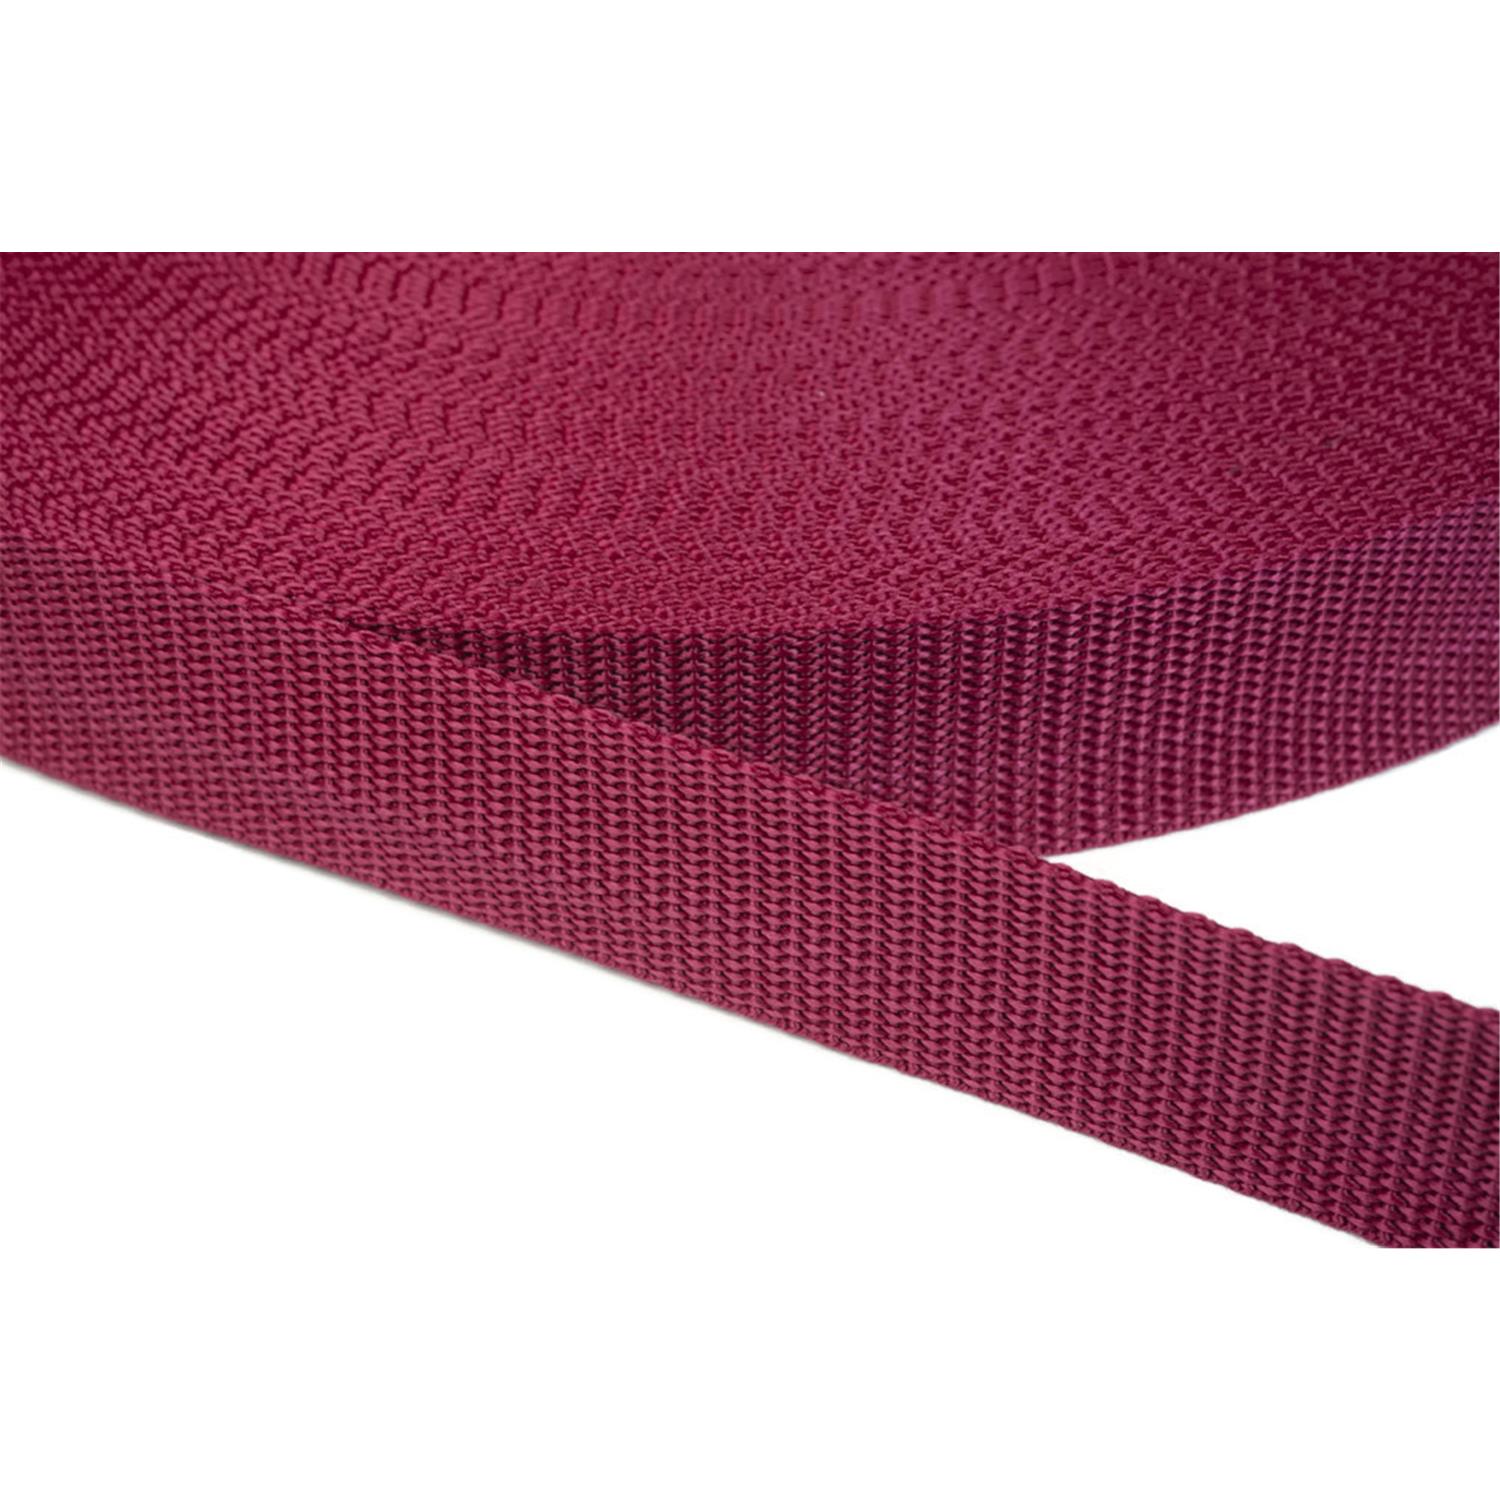 Gurtband 20mm breit aus Polypropylen in 41 Farben 21 - dunkelrot 12 Meter